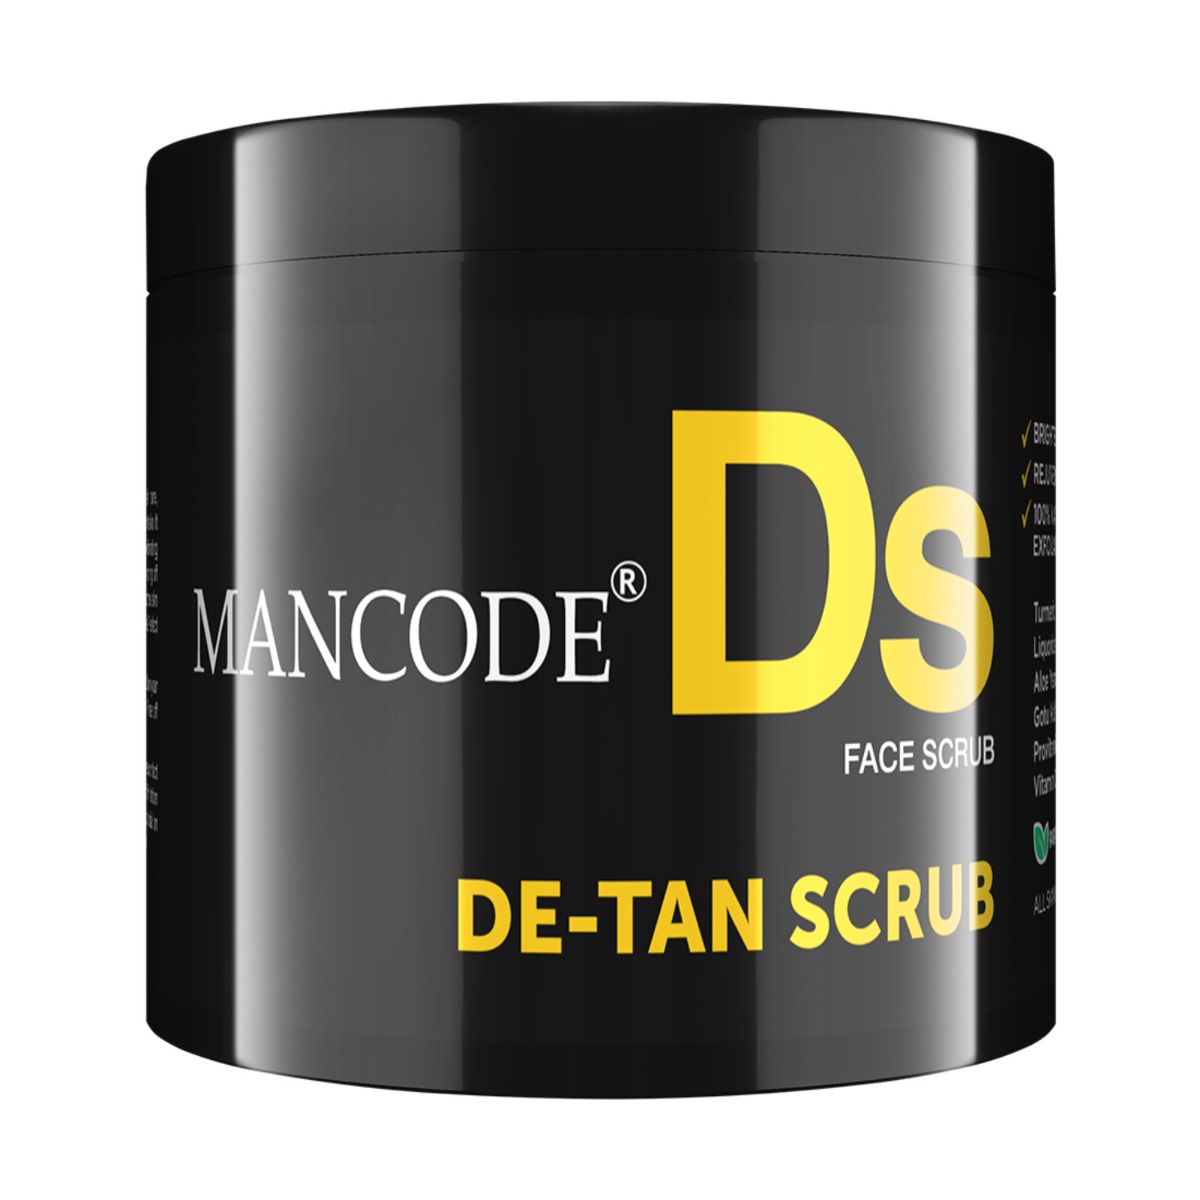 Mancode De-Tan Face Scrub, 100gm